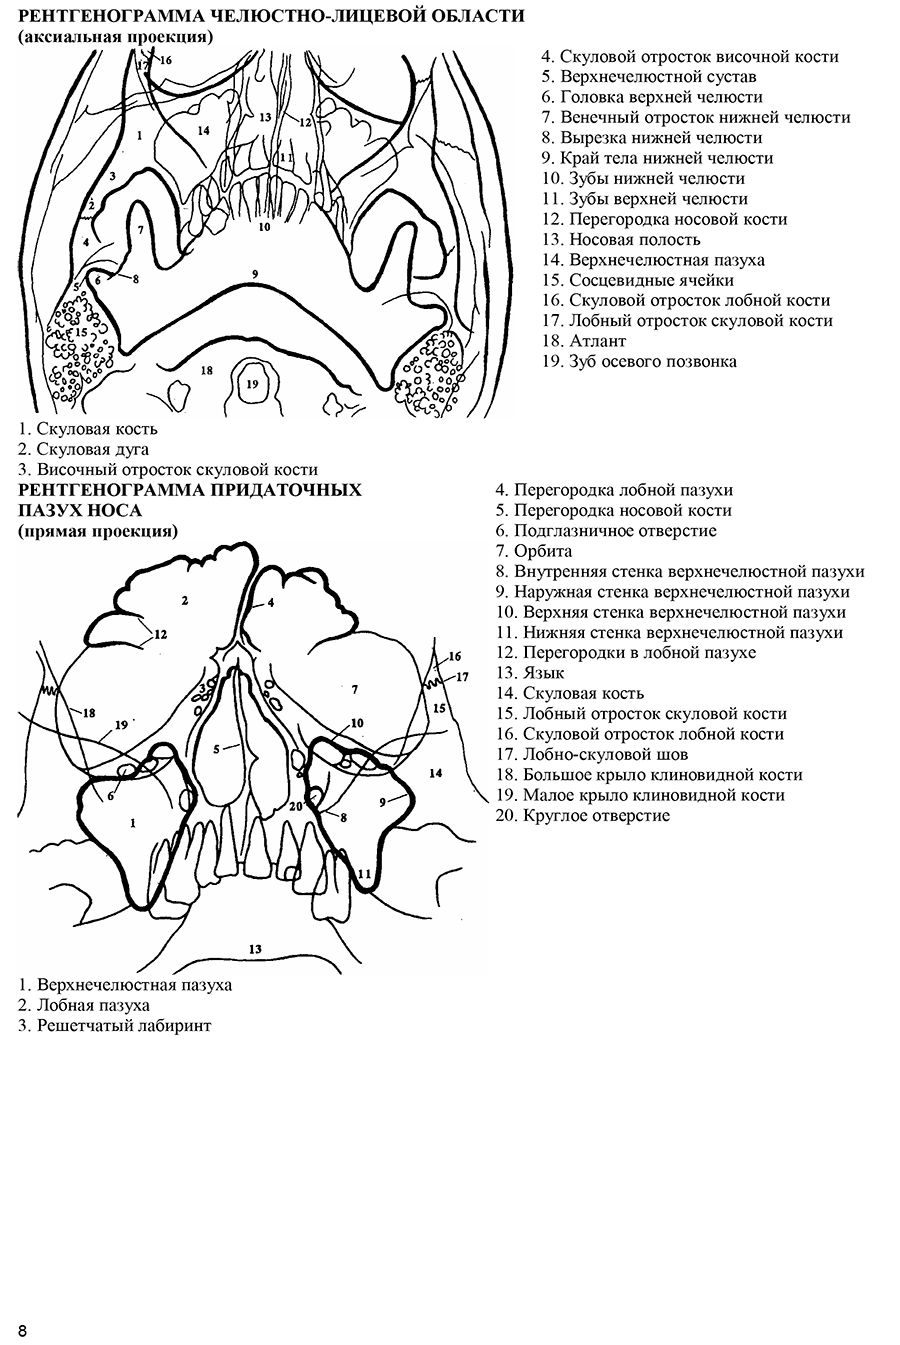 Рентгенограмма челюстно-лицевой области